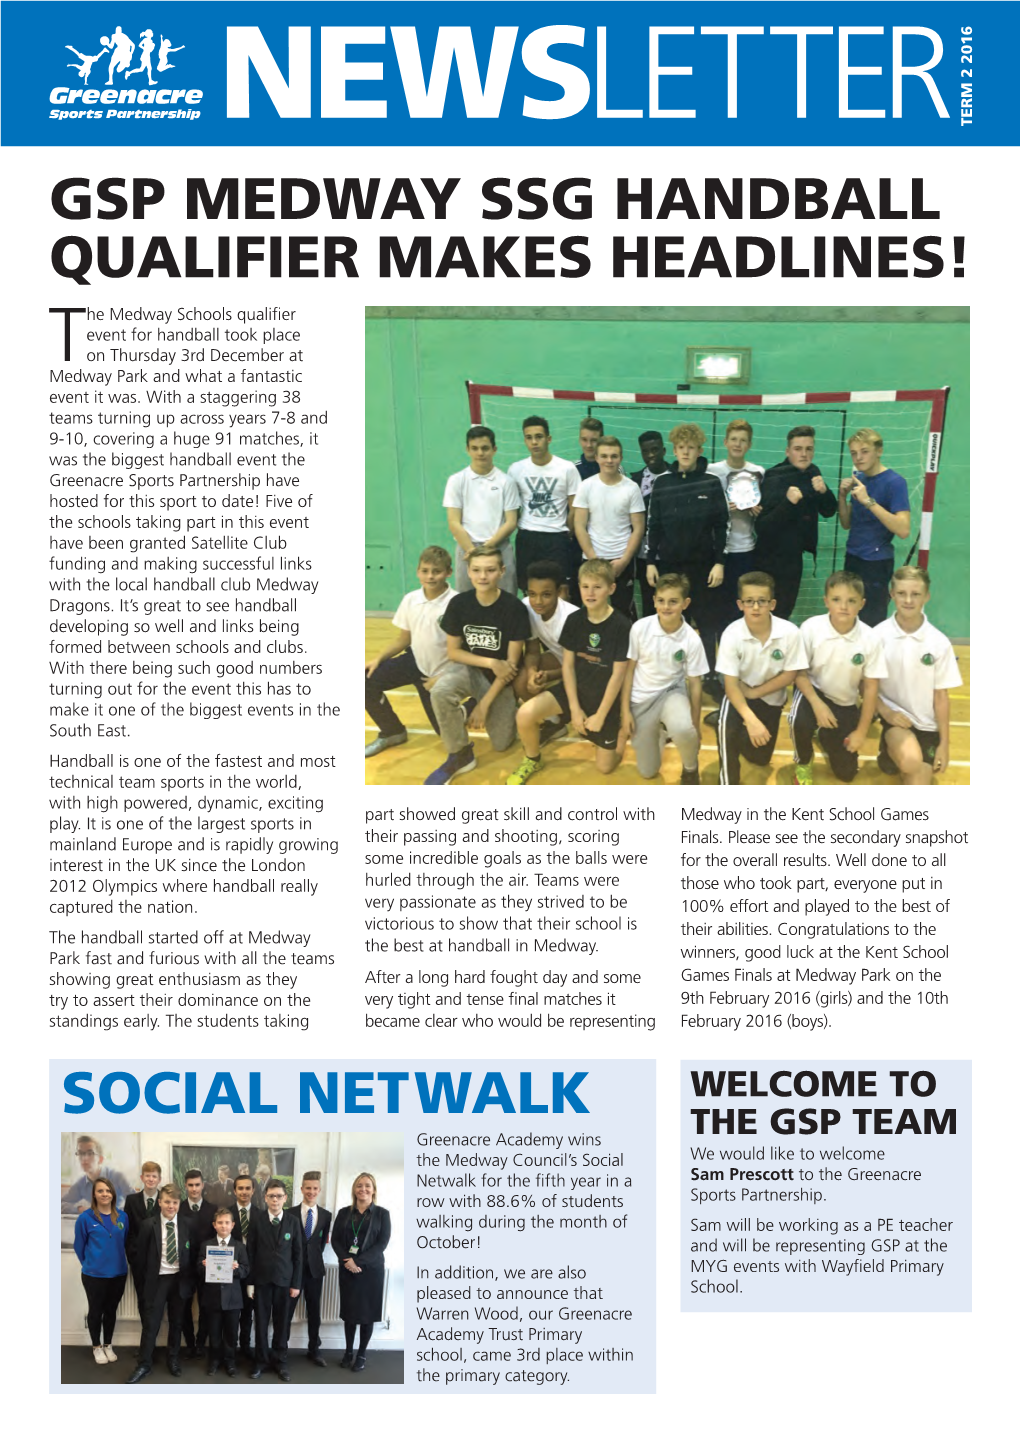 Gsp Medway Ssg Handball Qualifier Makes Headlines!